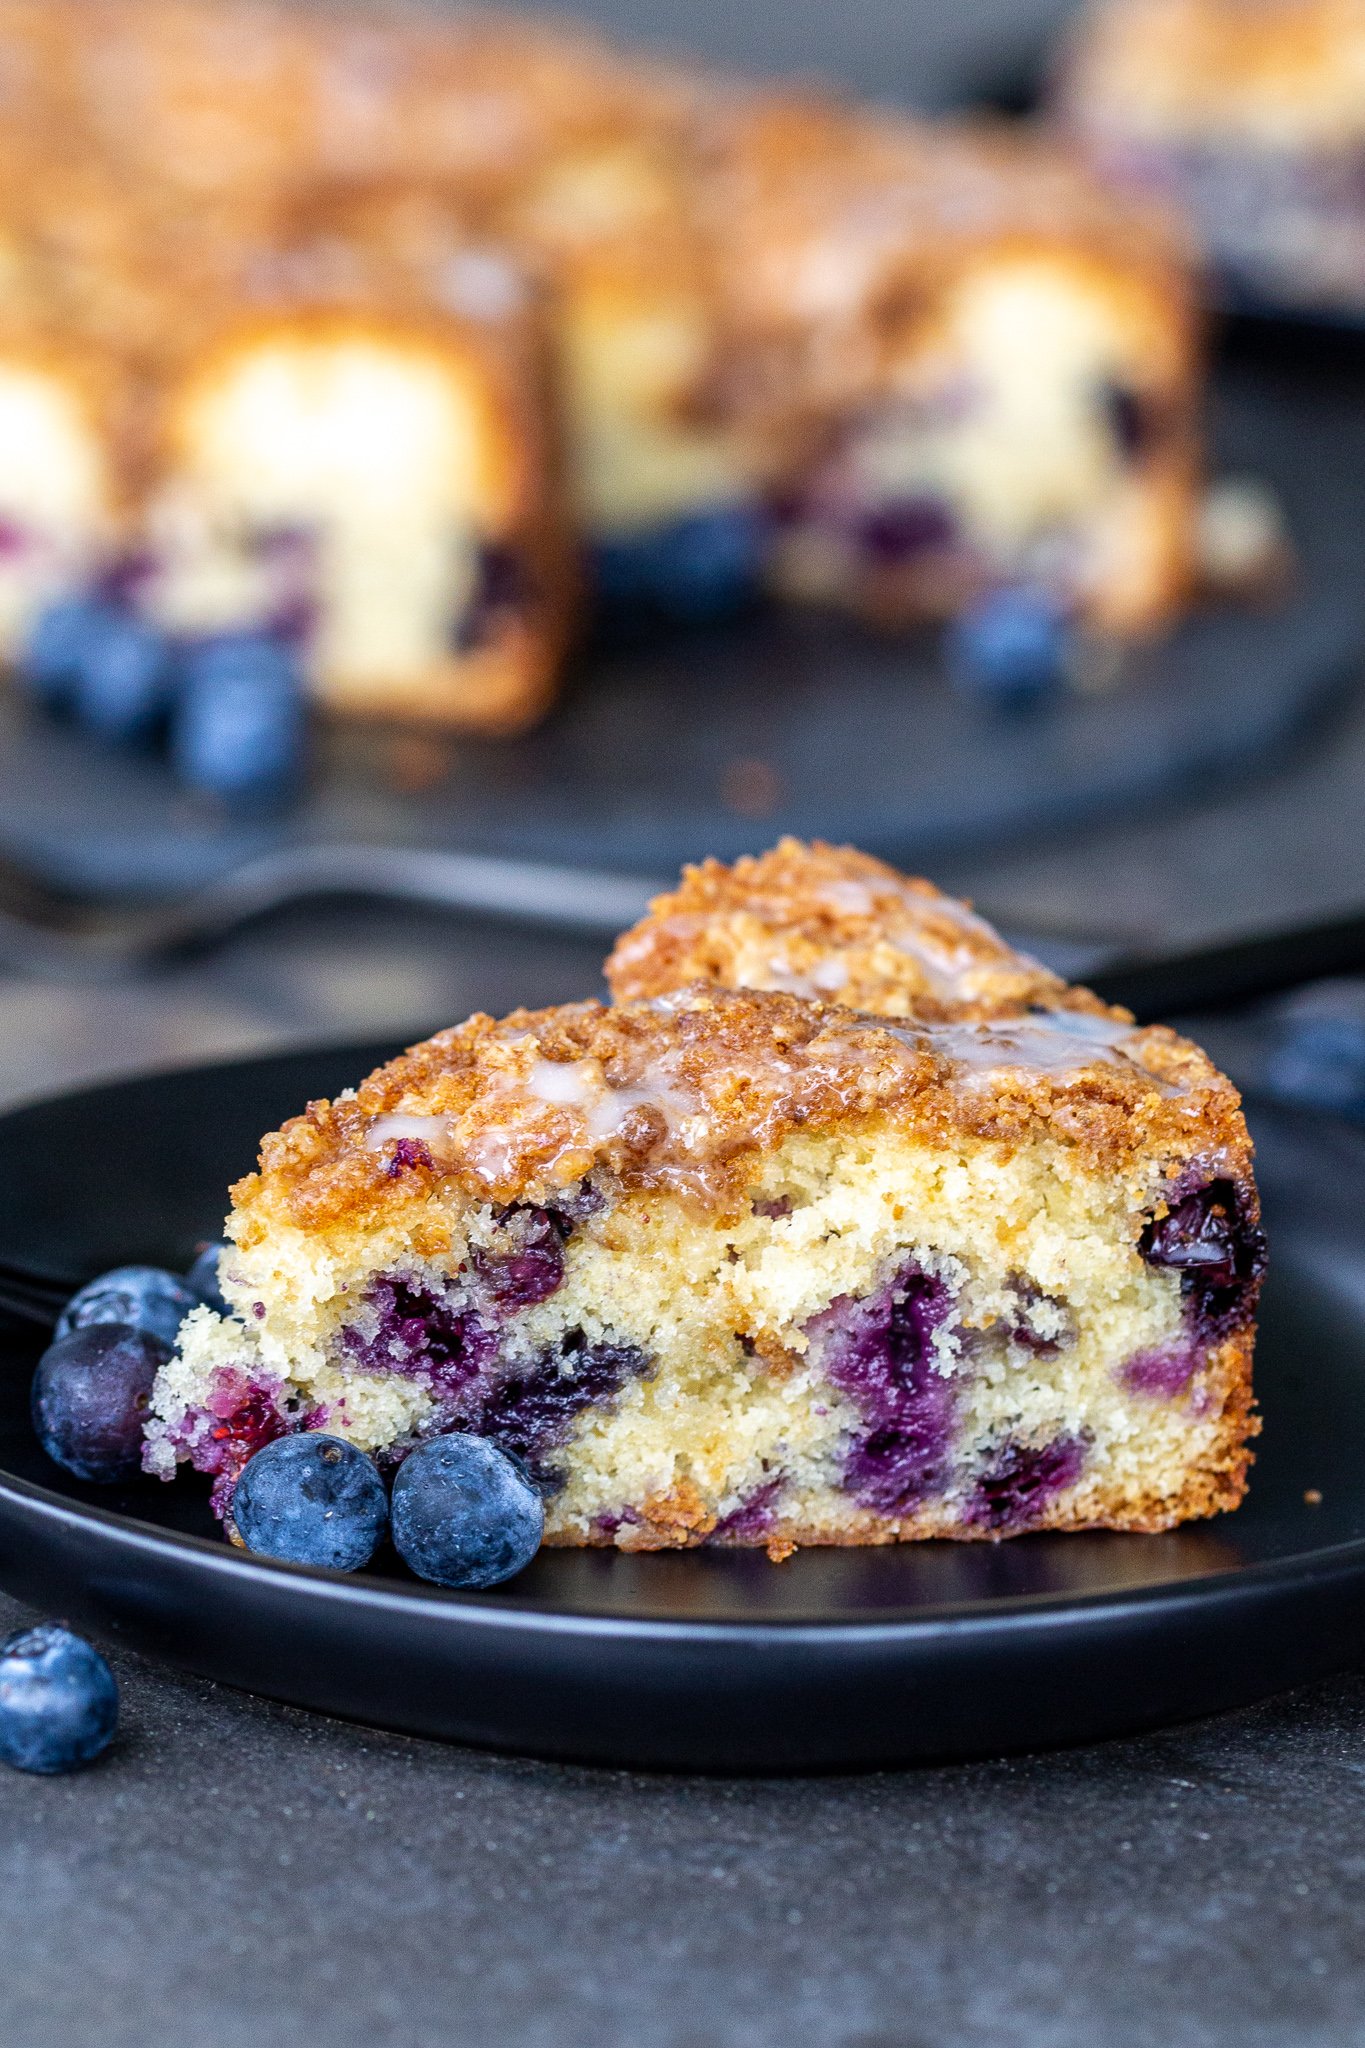 Blueberry Streusel Cake - Fun recipe for summer brunch or dessert!